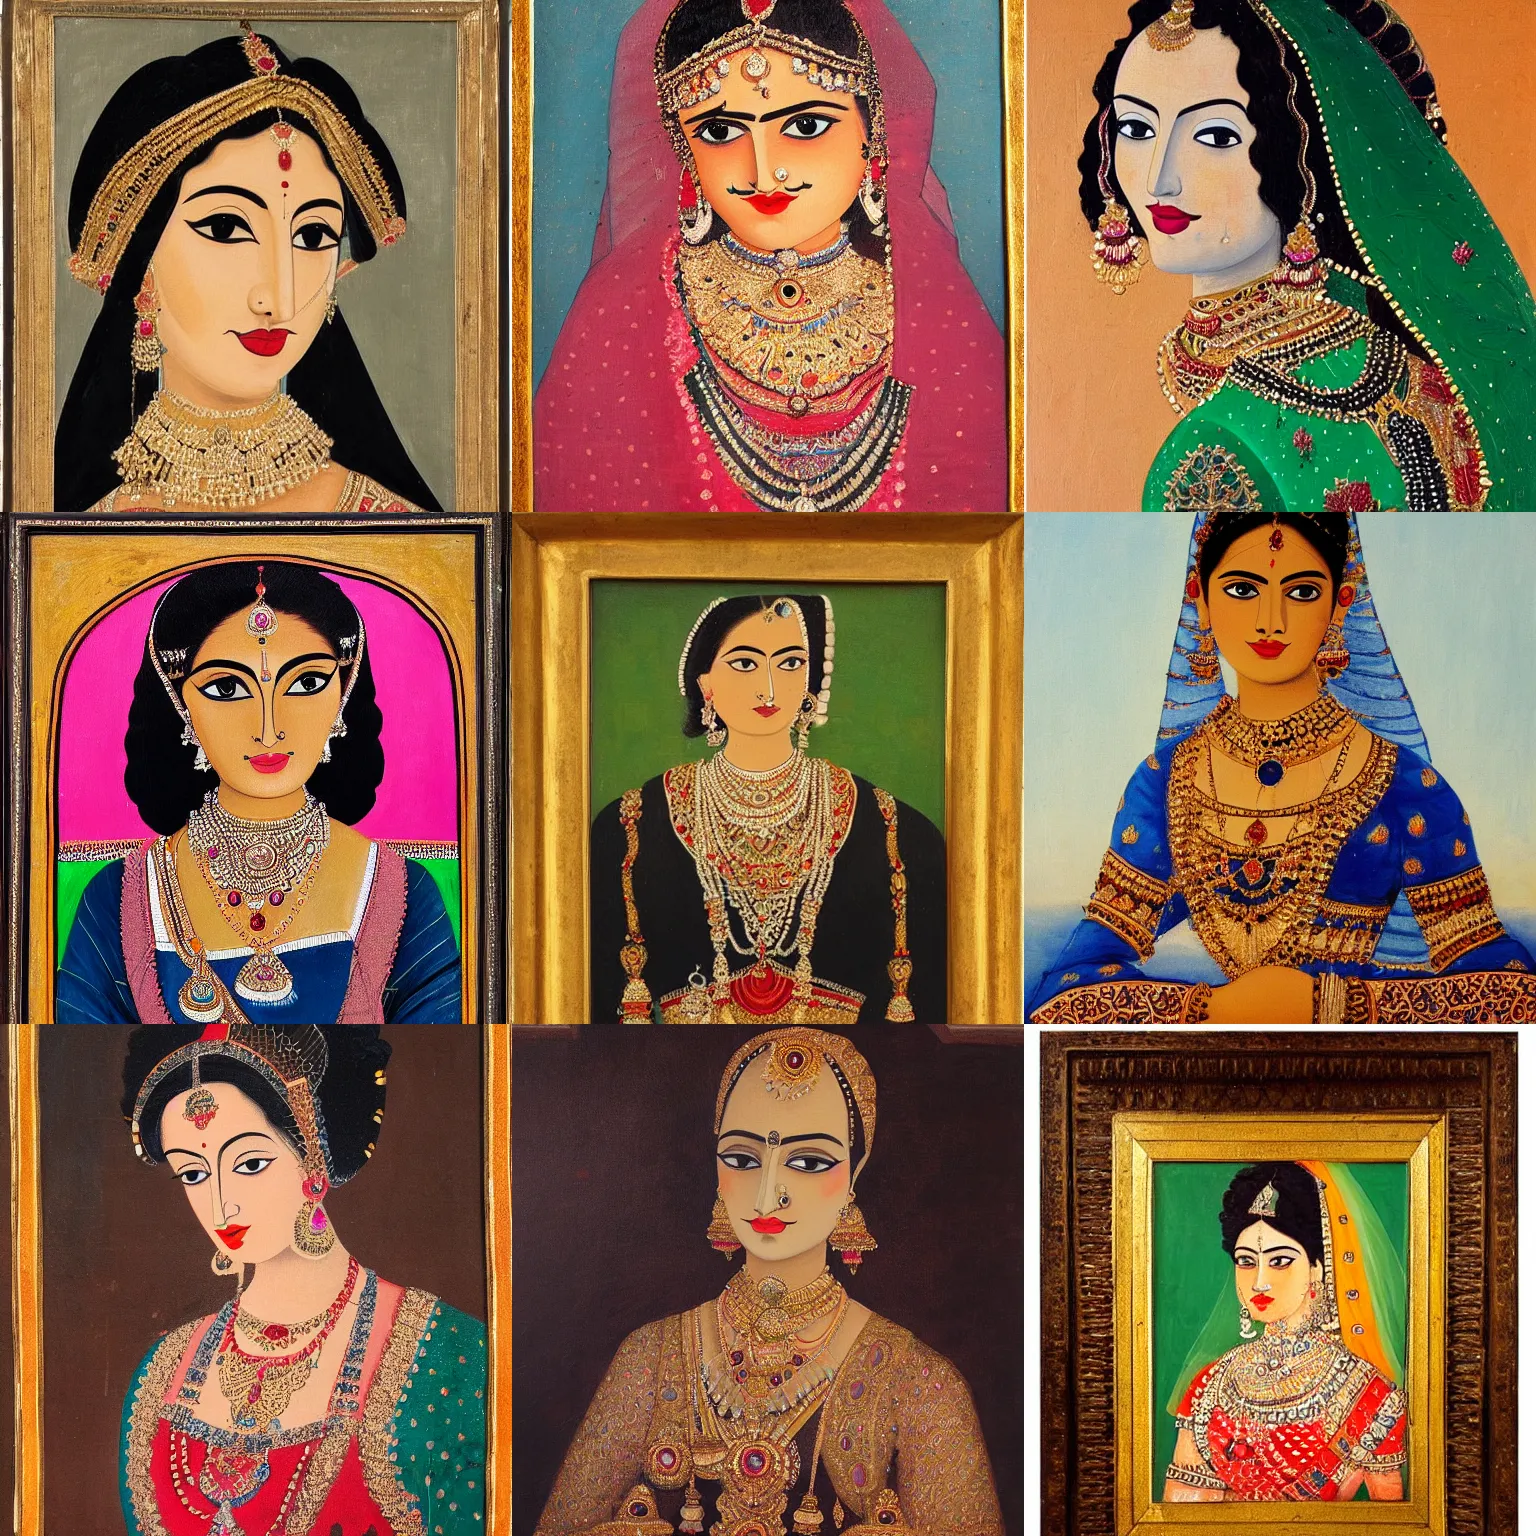 Prompt: a portrait of an elegant lady, rajput painting